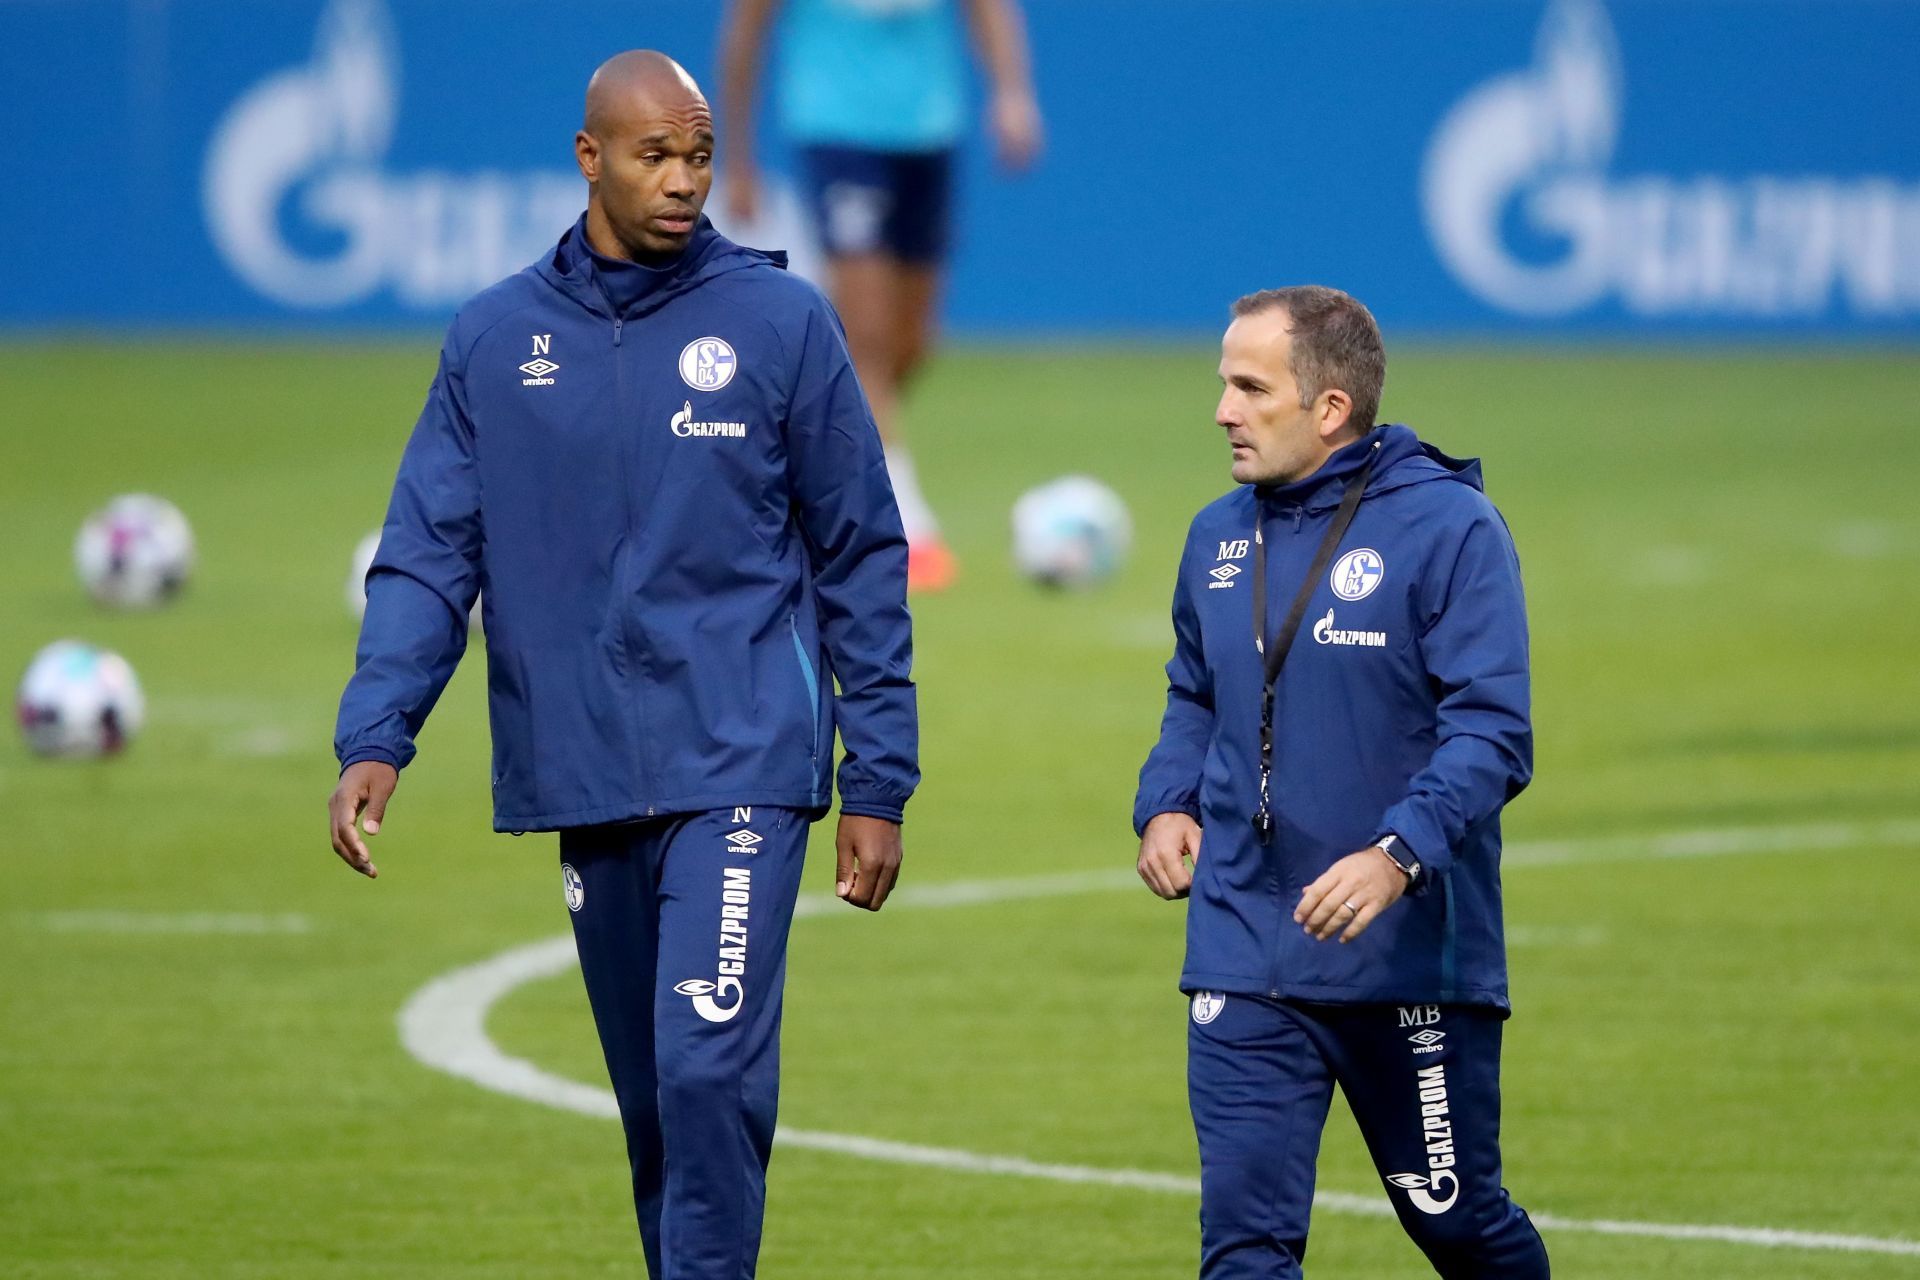 Naldo has taken up the assistant coach position at Schalke FC.